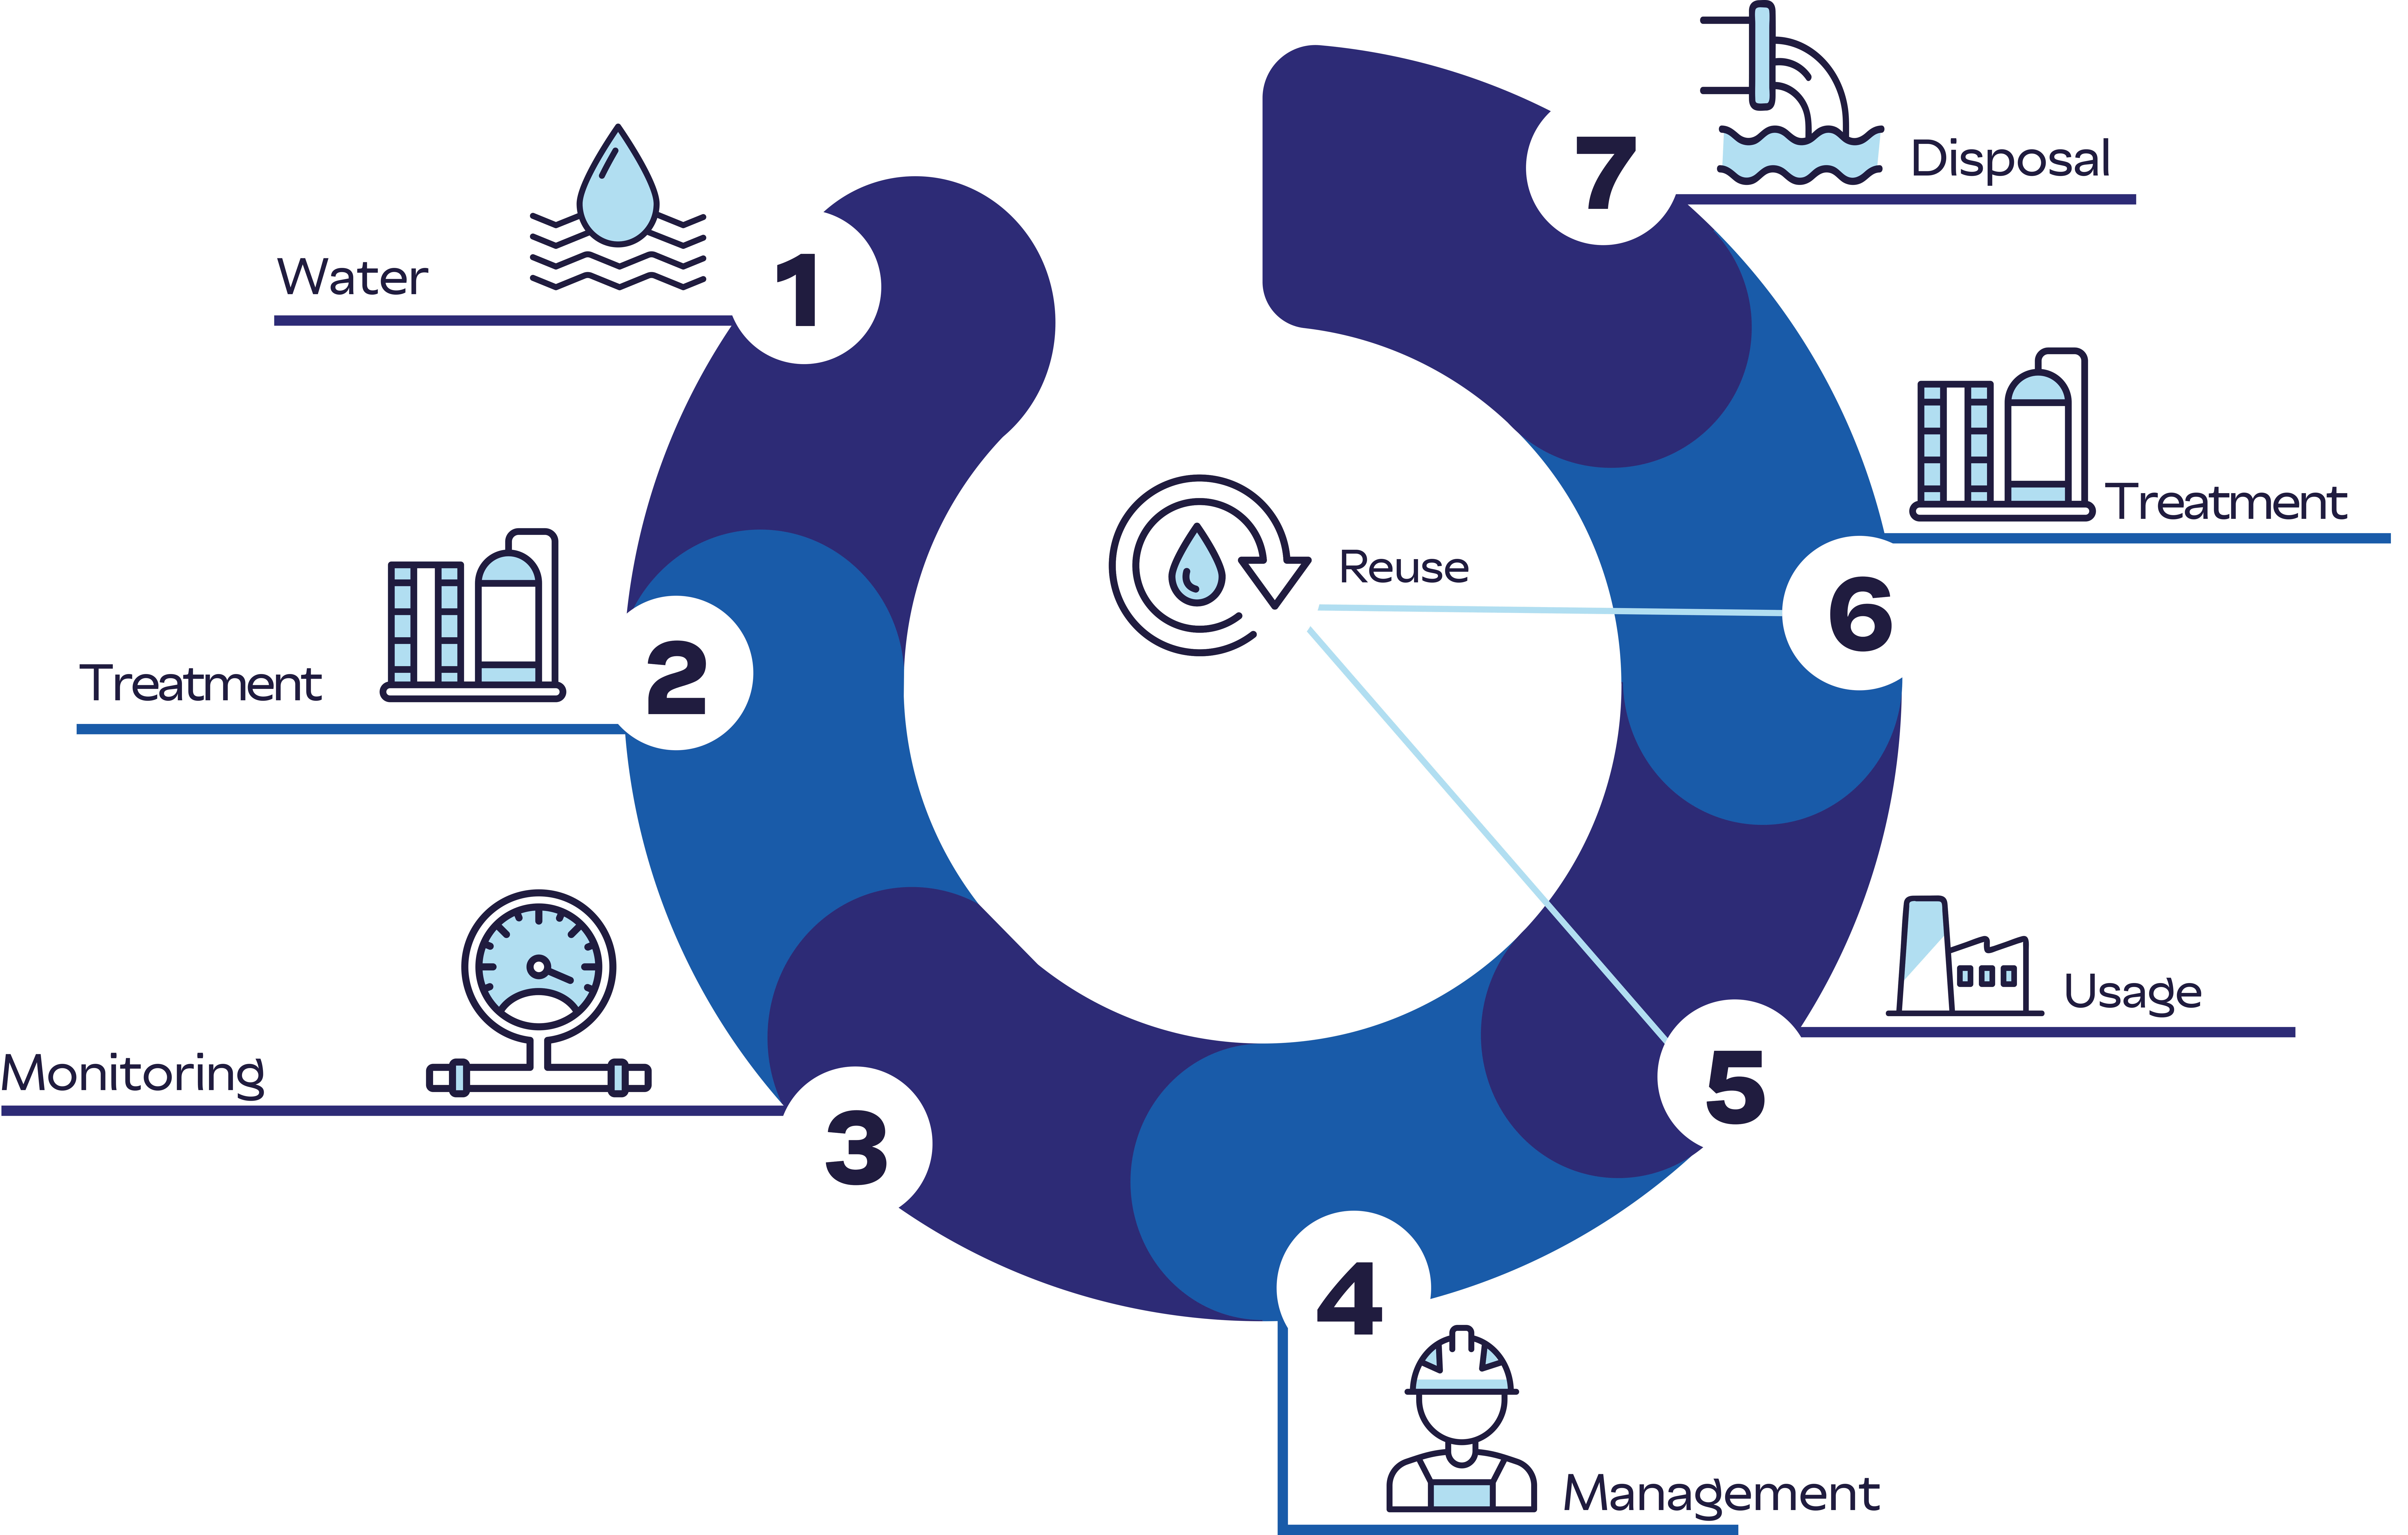 Circle graphic 1 - Water 2 - Treatment 3 - Monitoring 4 - Management 5 - Usage 6 - Treatment 7 - Disposal